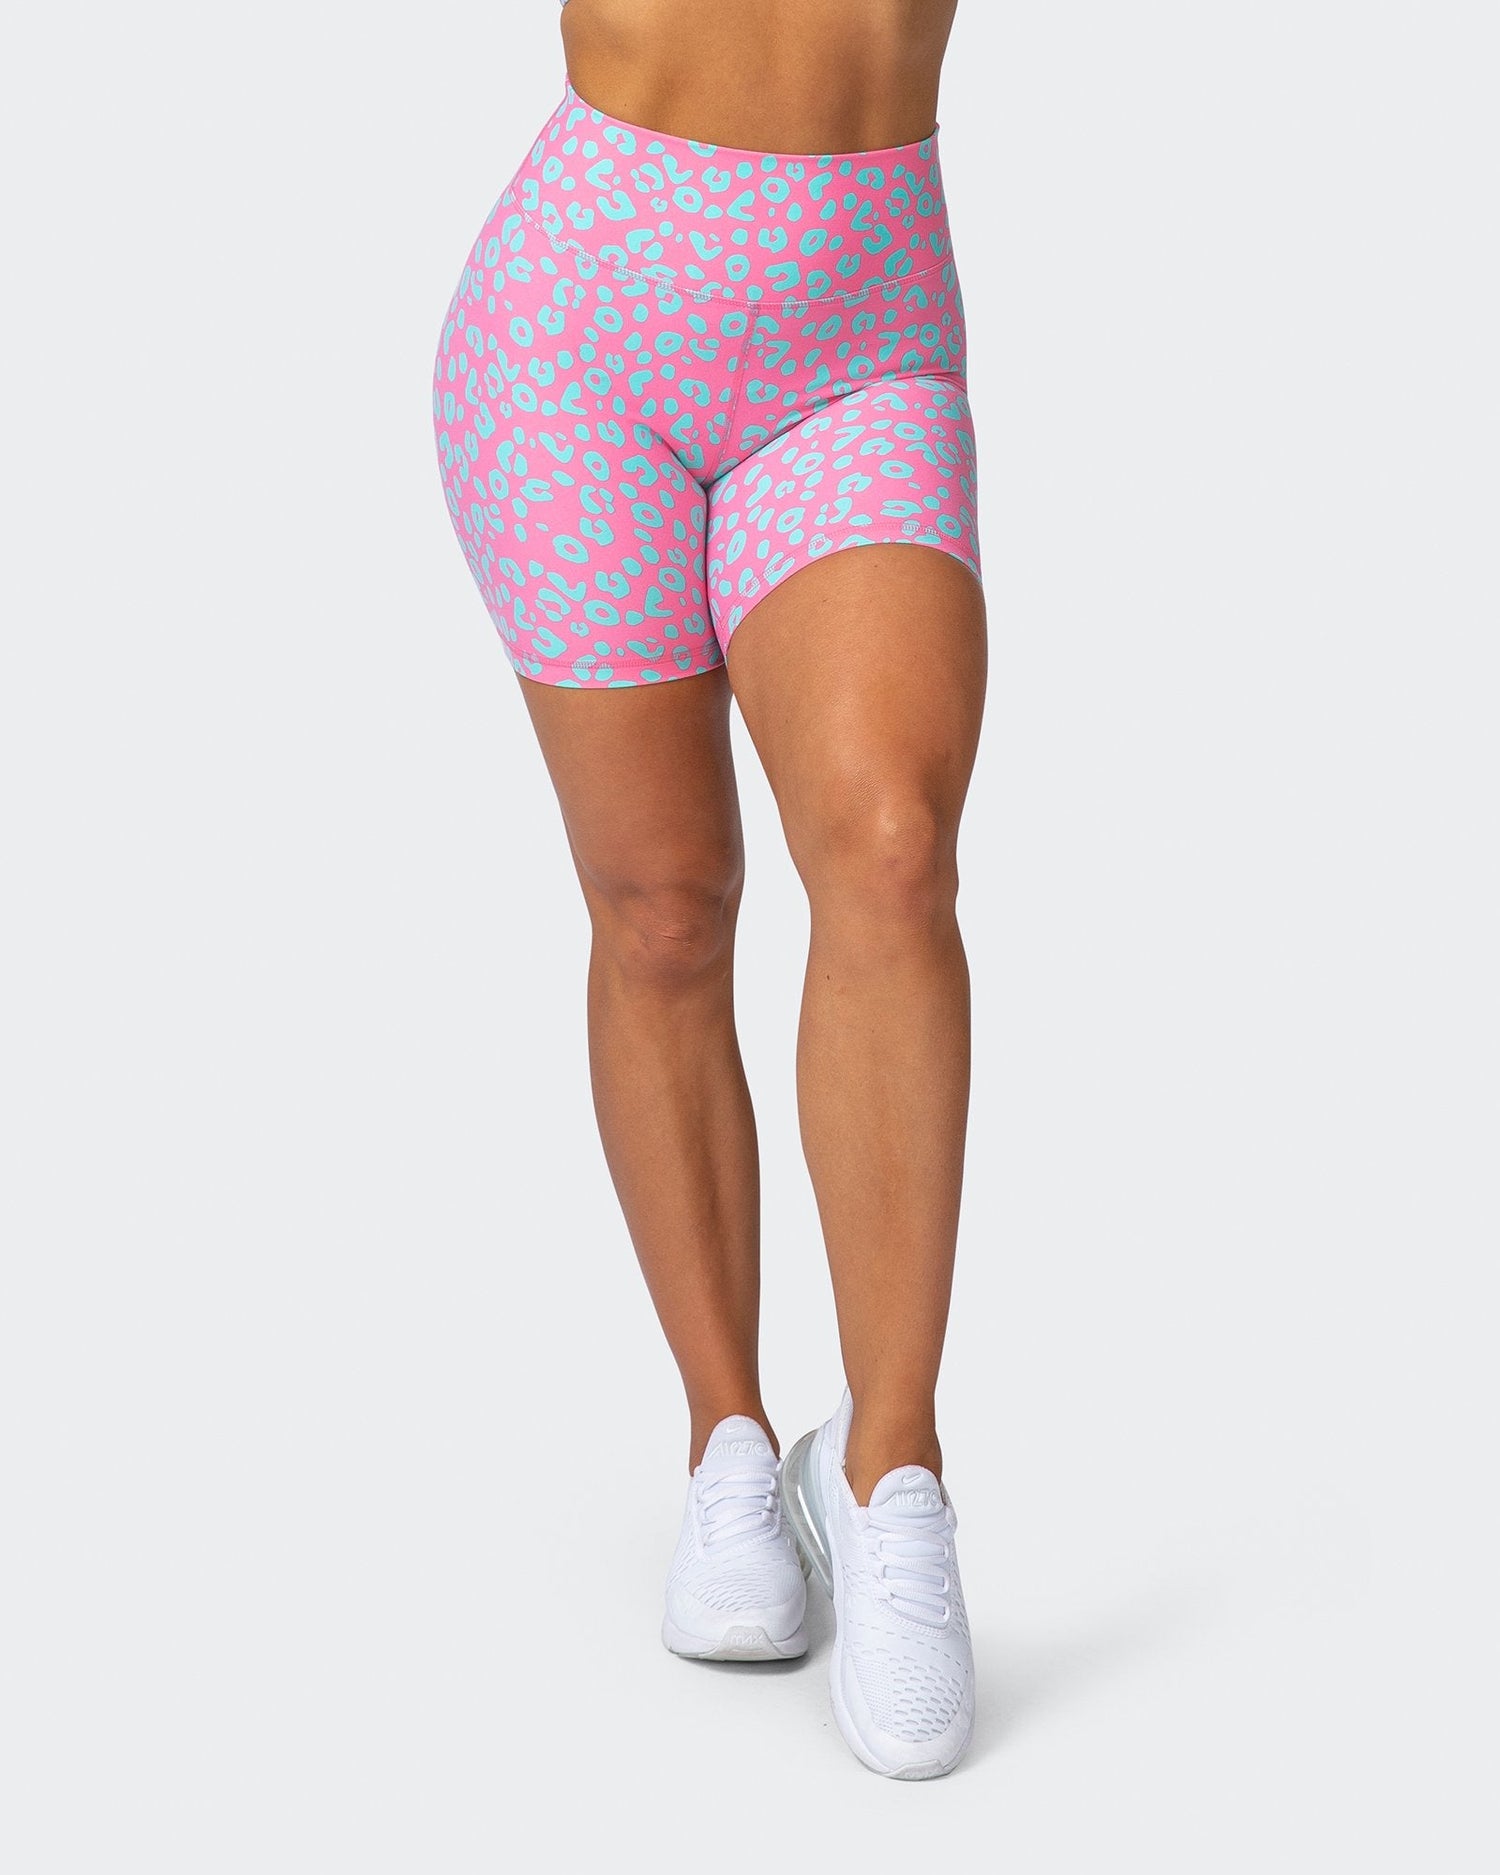 Signature Scrunch Bike Shorts - Cotton Candy Cheetah Print